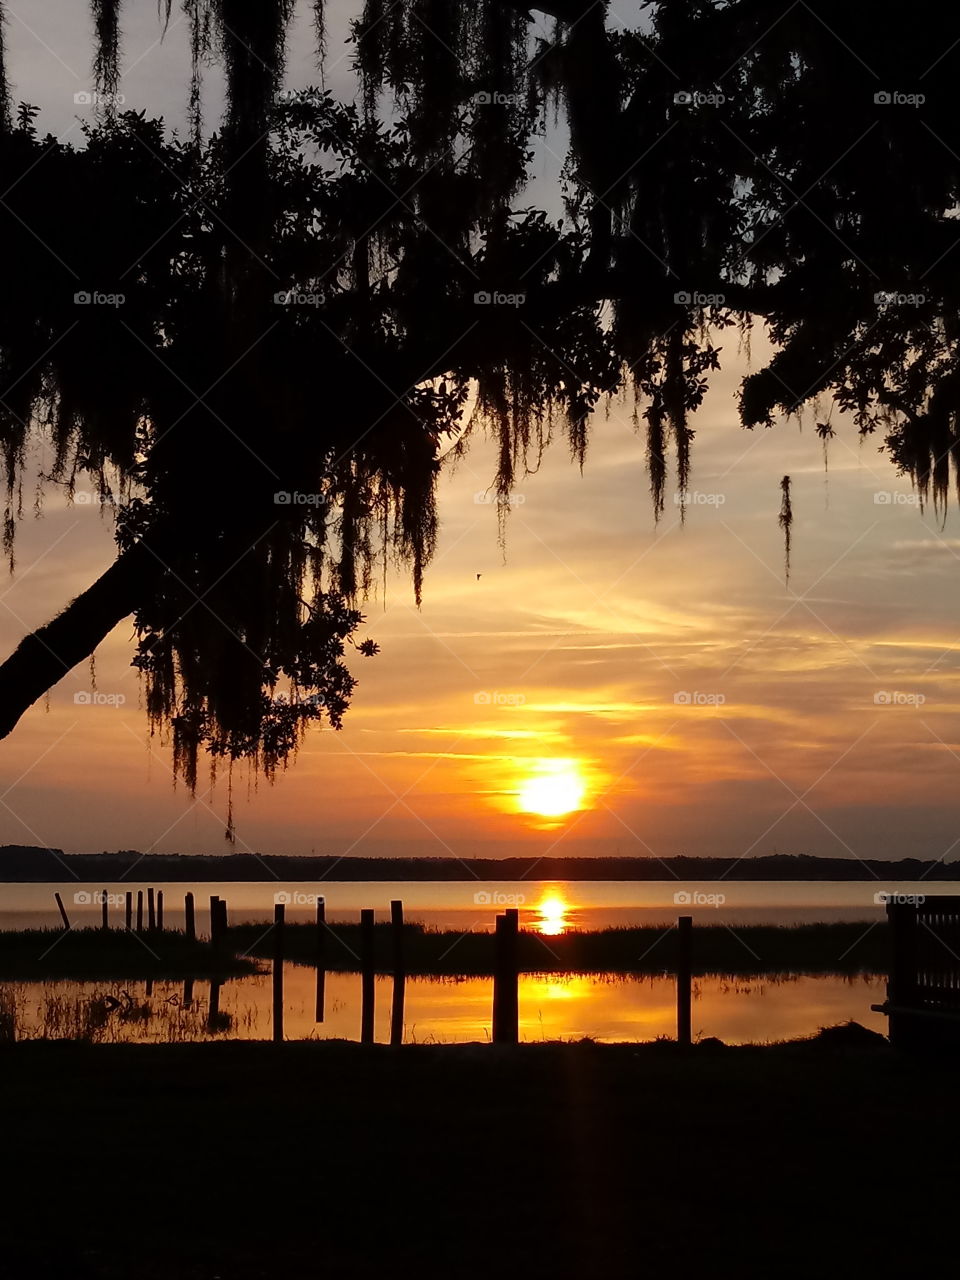 Floridan Chain of lakes sunrise